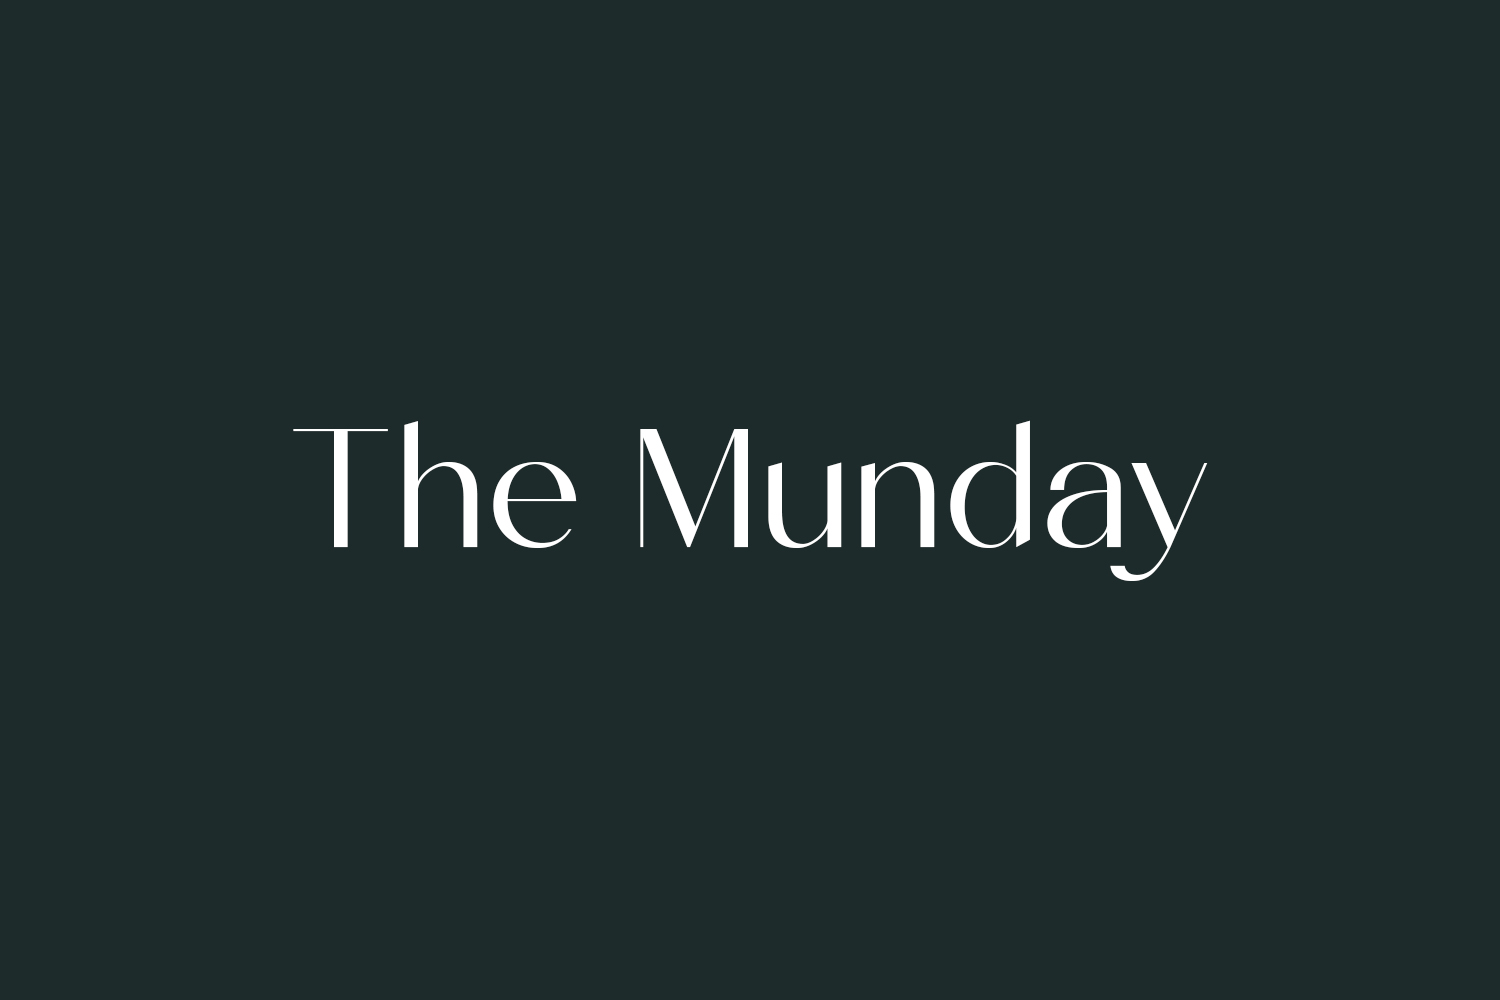 The Munday Free Font